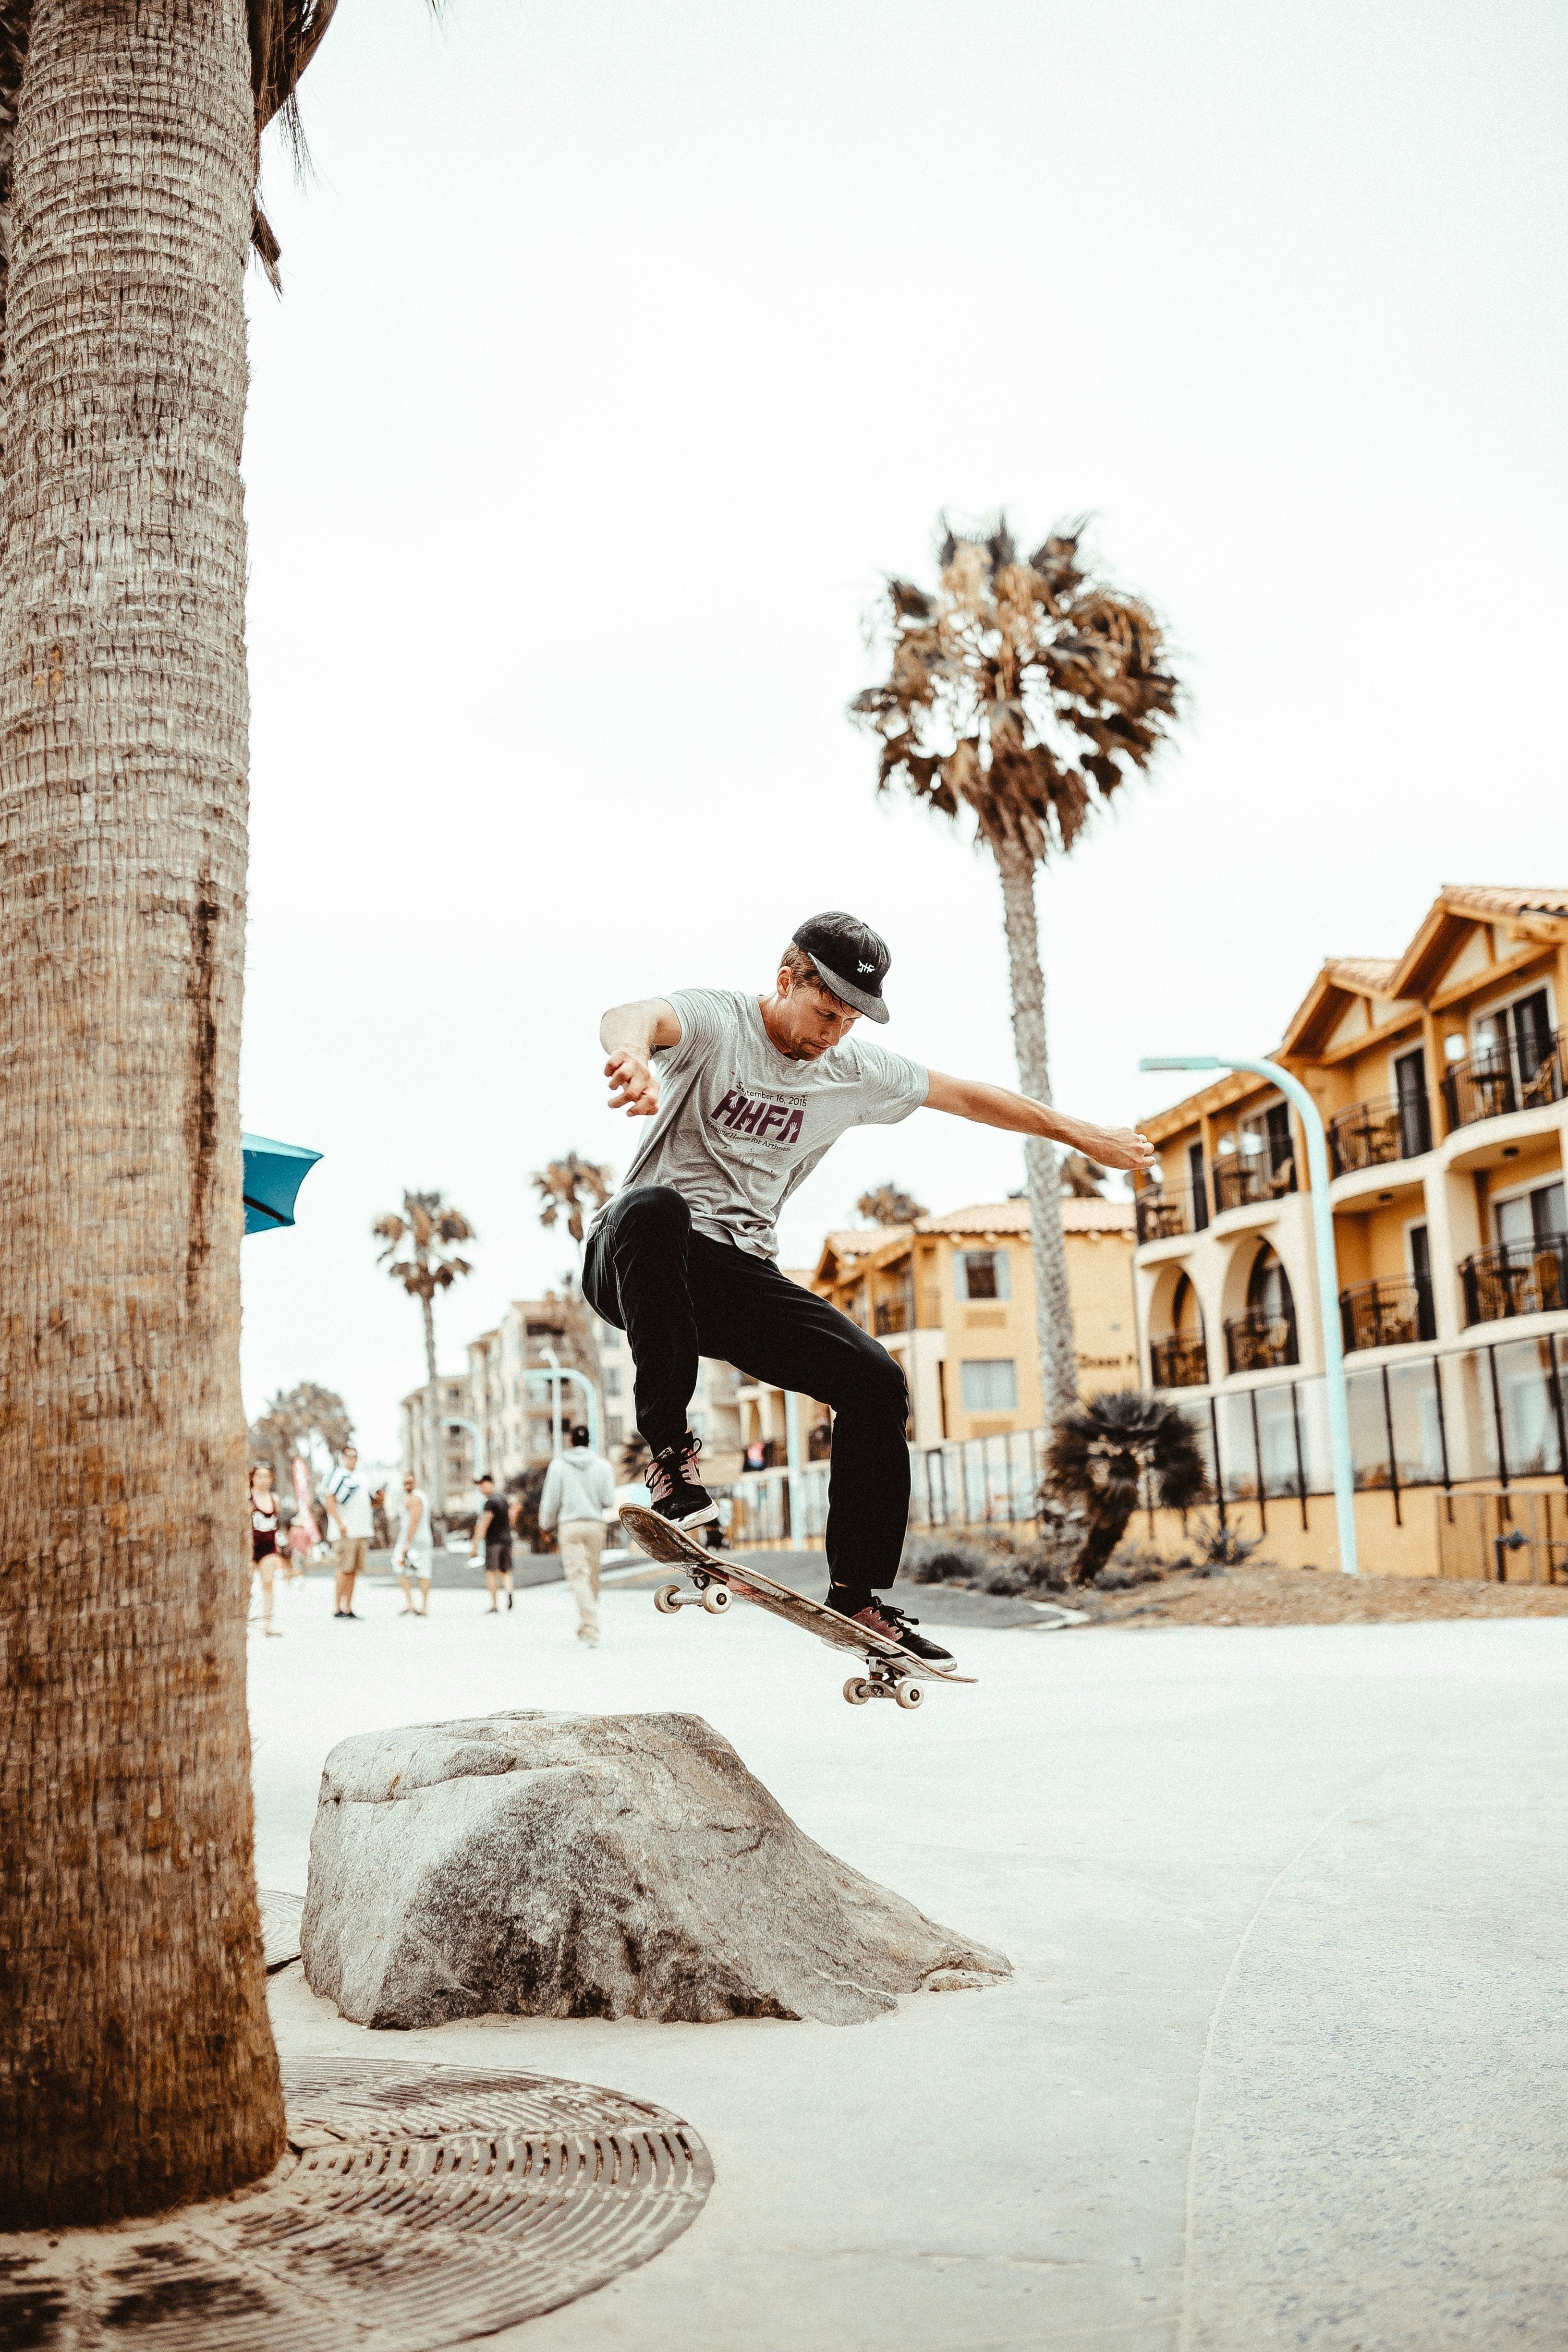 meesteres zweer Encommium Street Skateboarding [A Complete Guide]